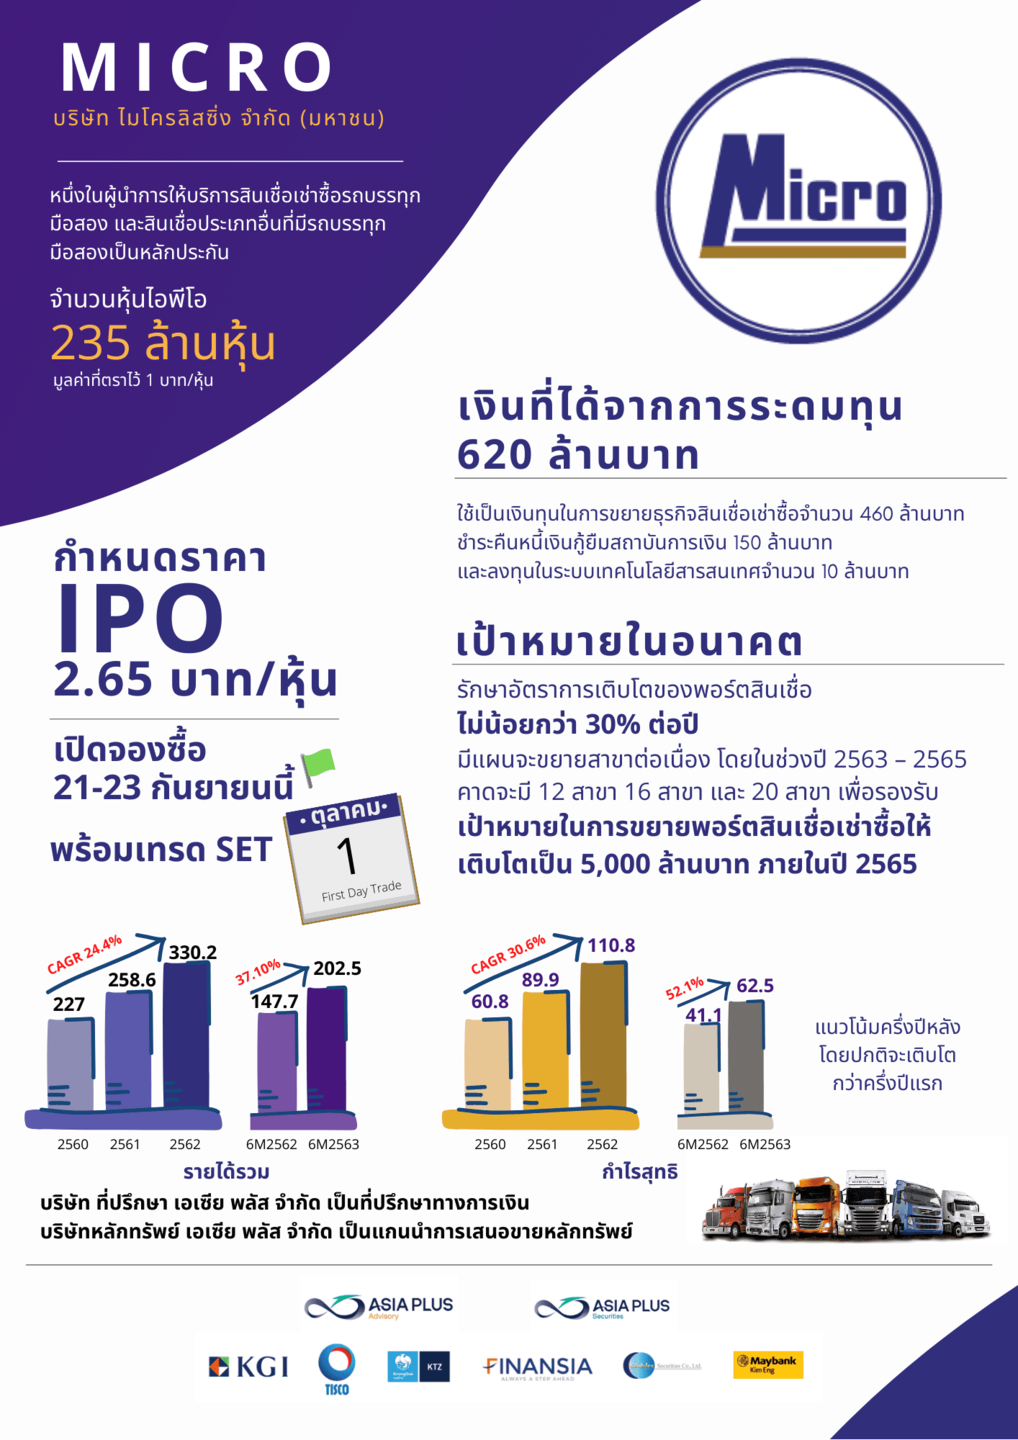 "Micro" set to IPO at 2.65 bahts/share